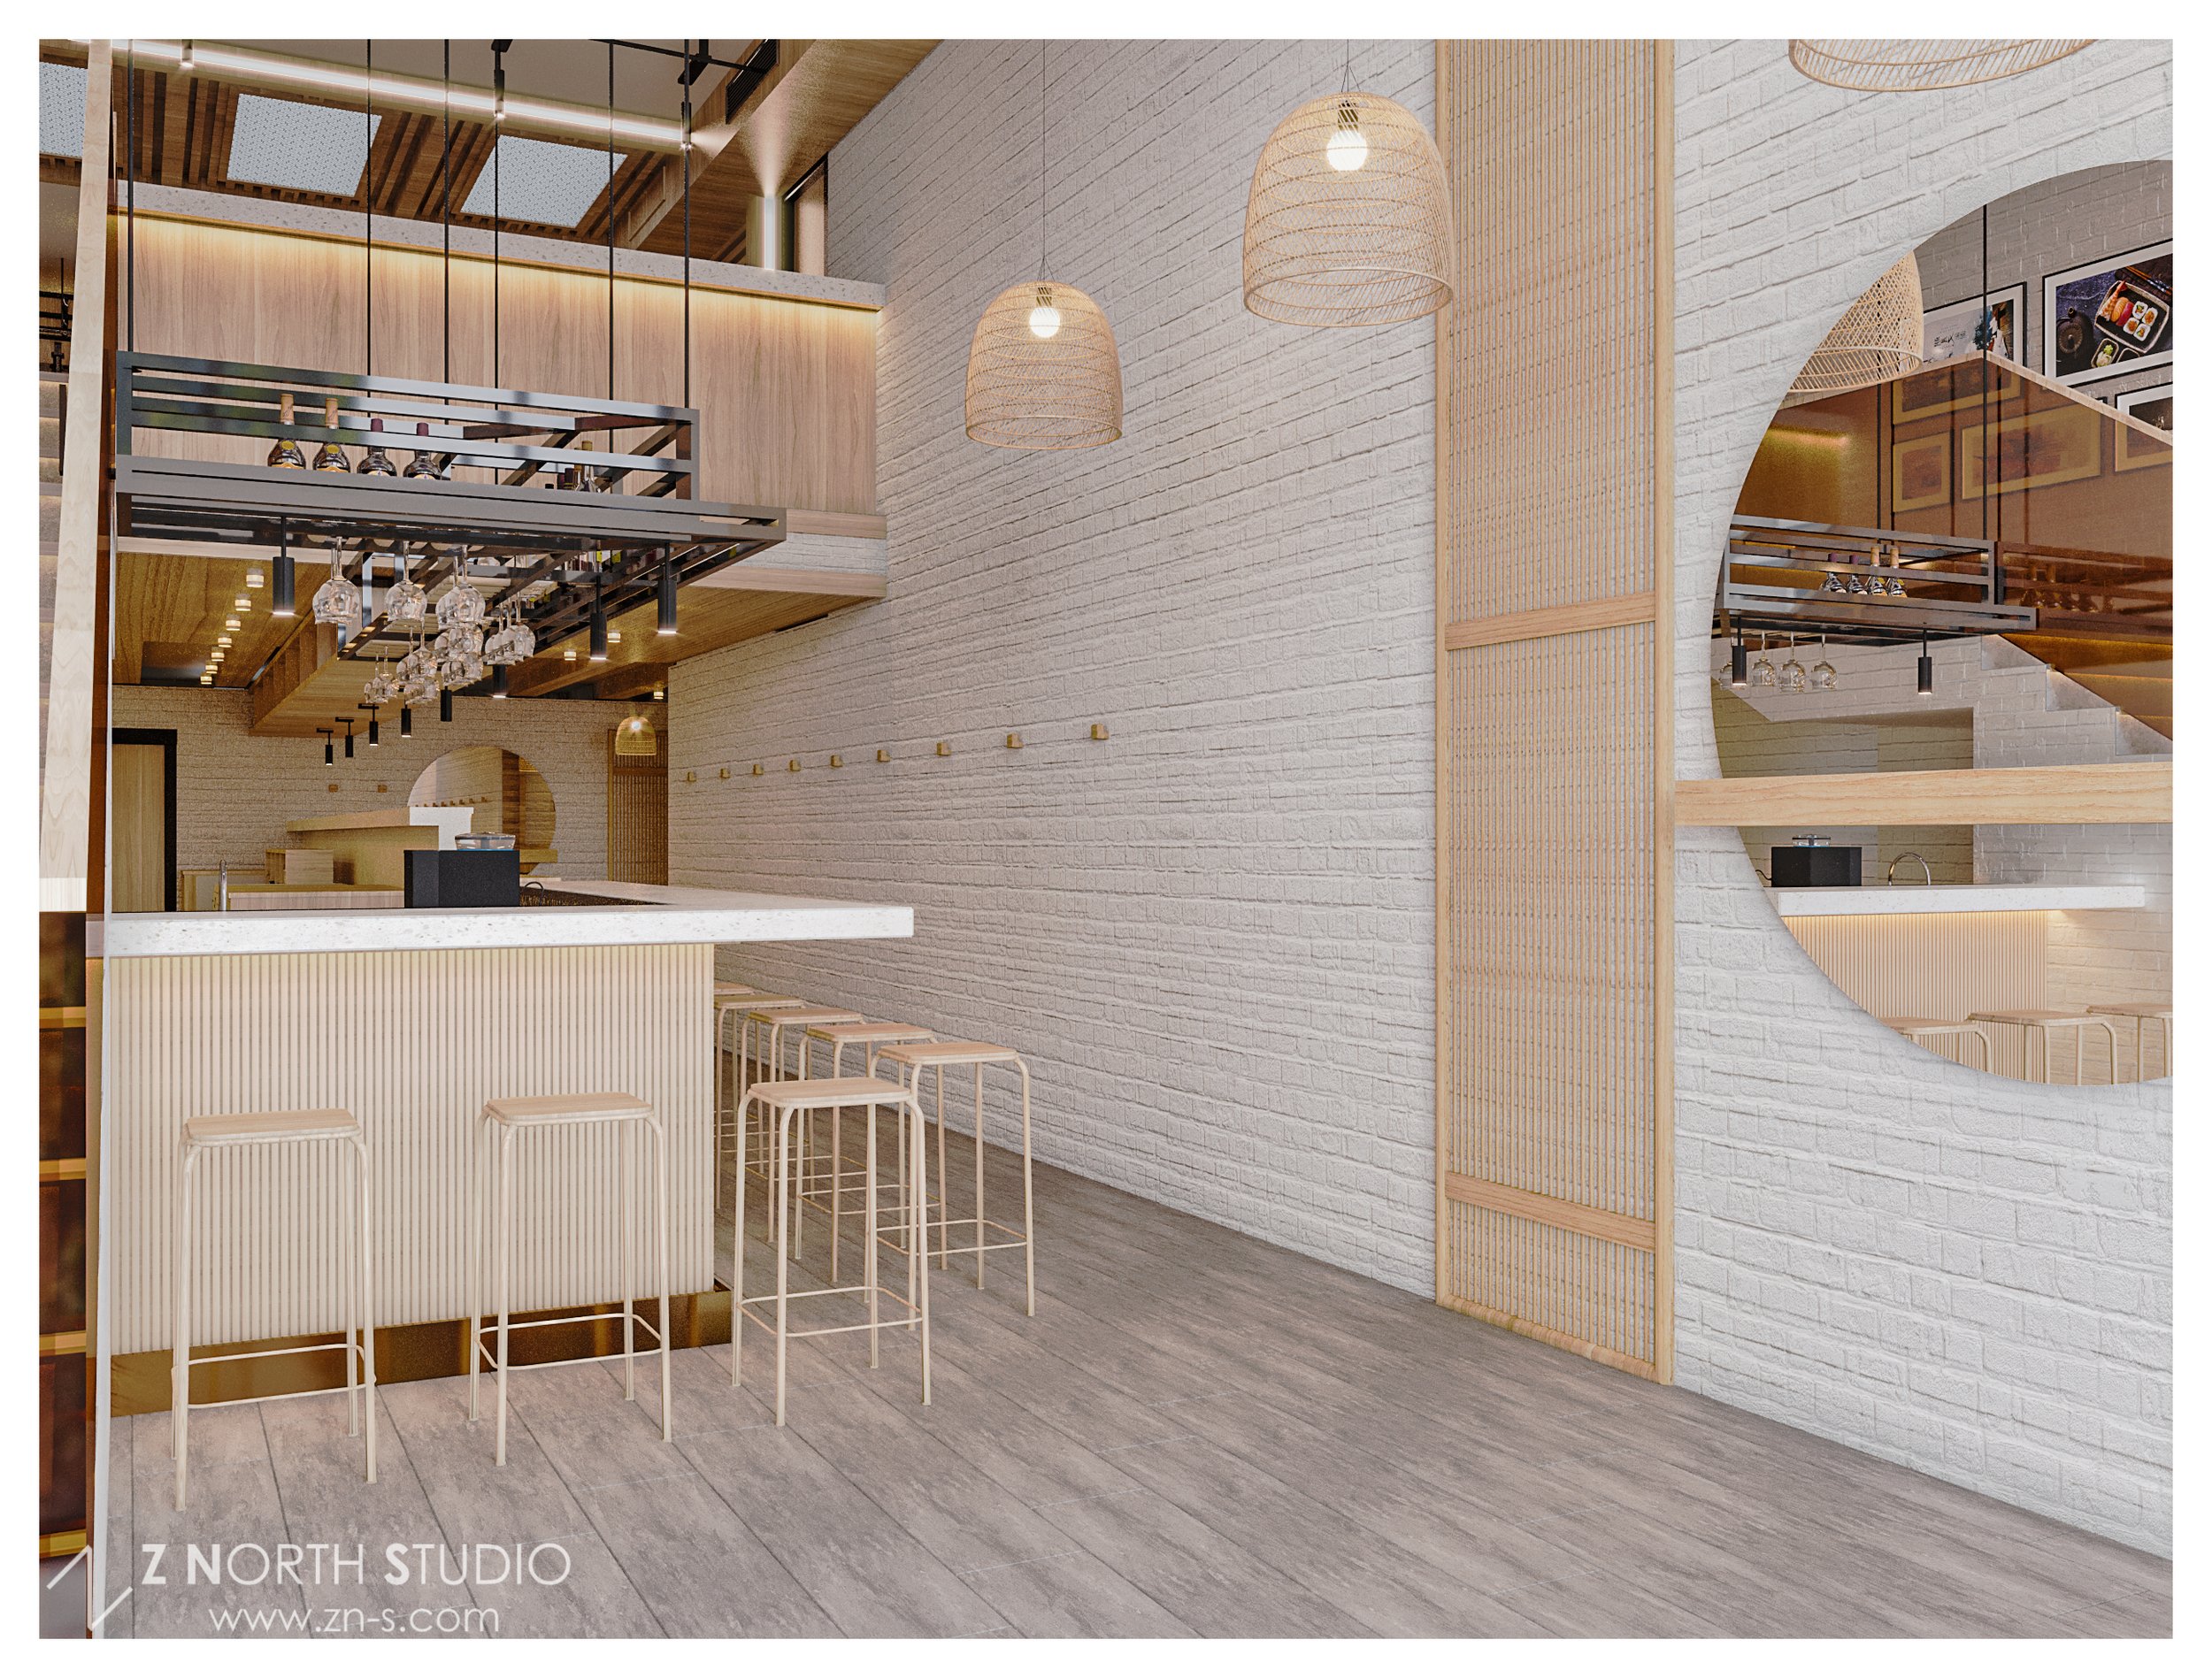 Umai Nori Restaurant Design Z North Studio (3).jpg